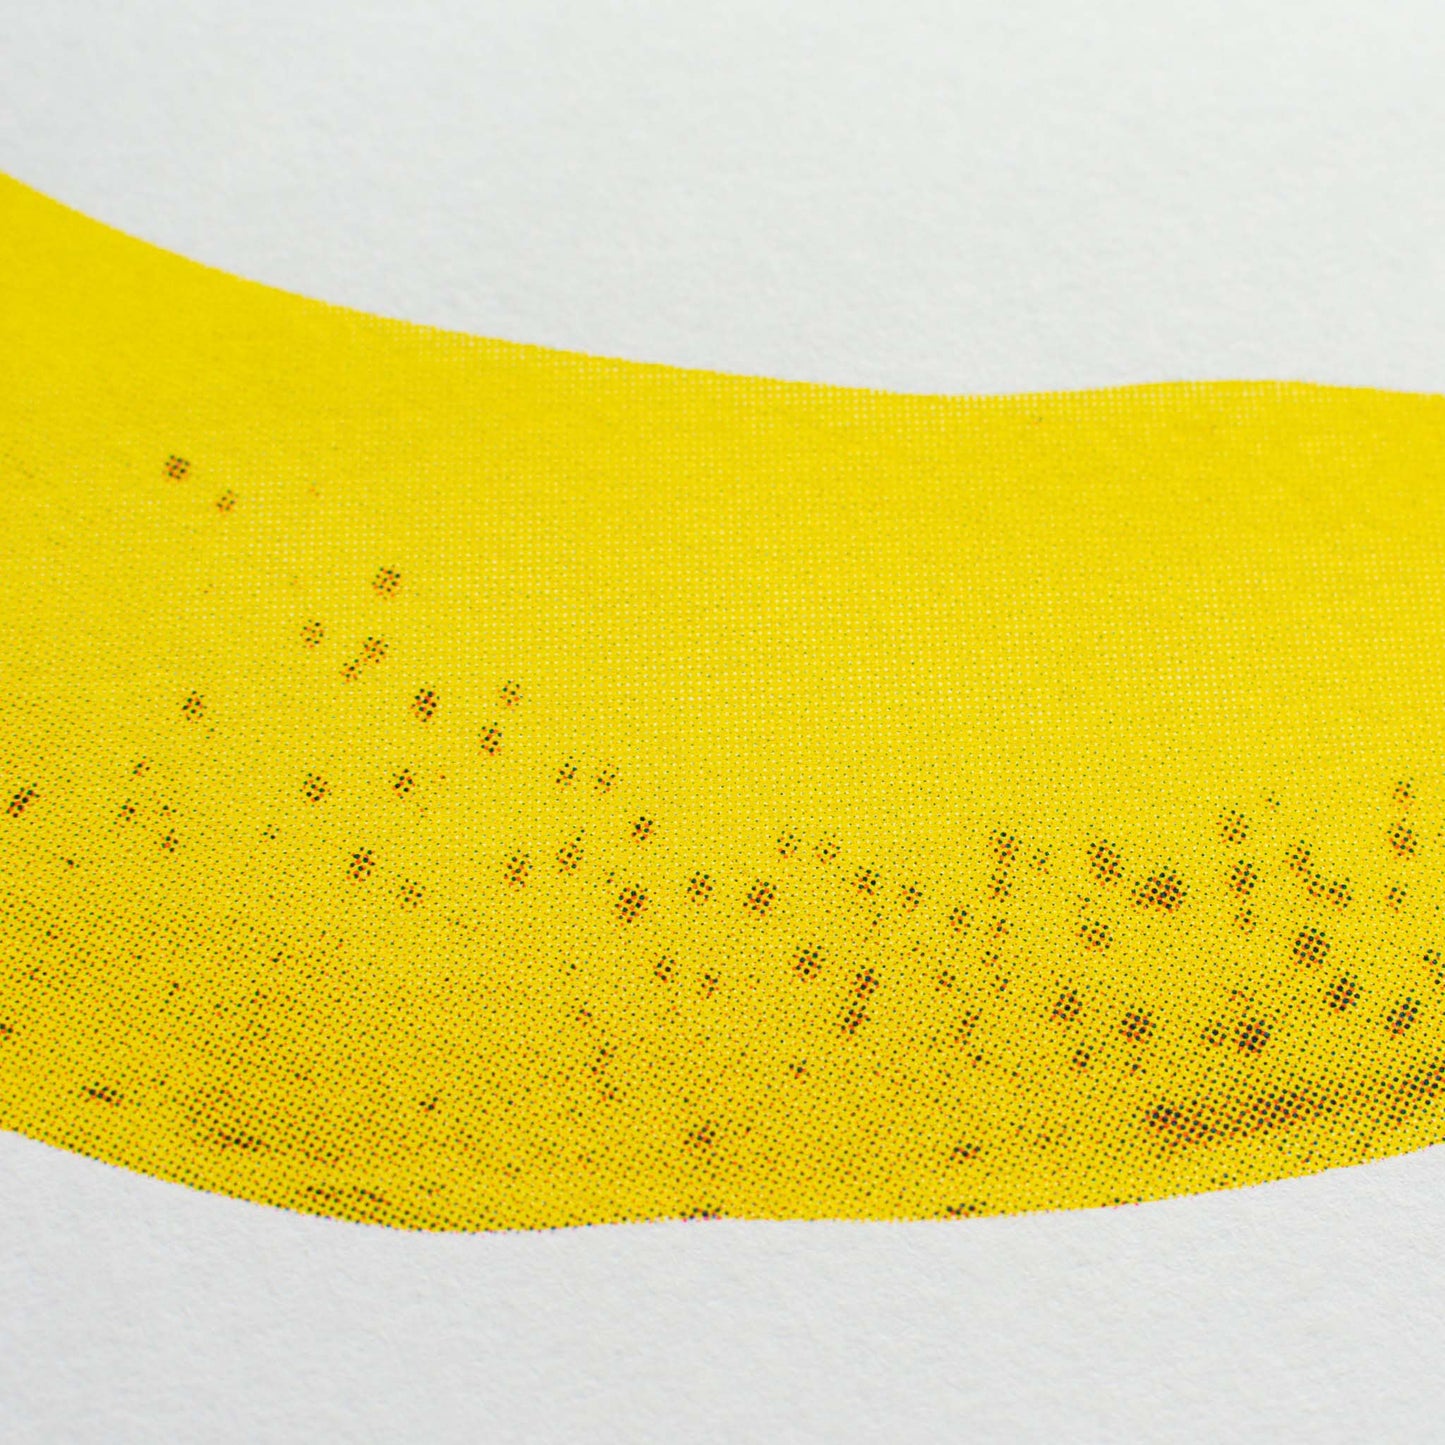 Plátano Lámina artística